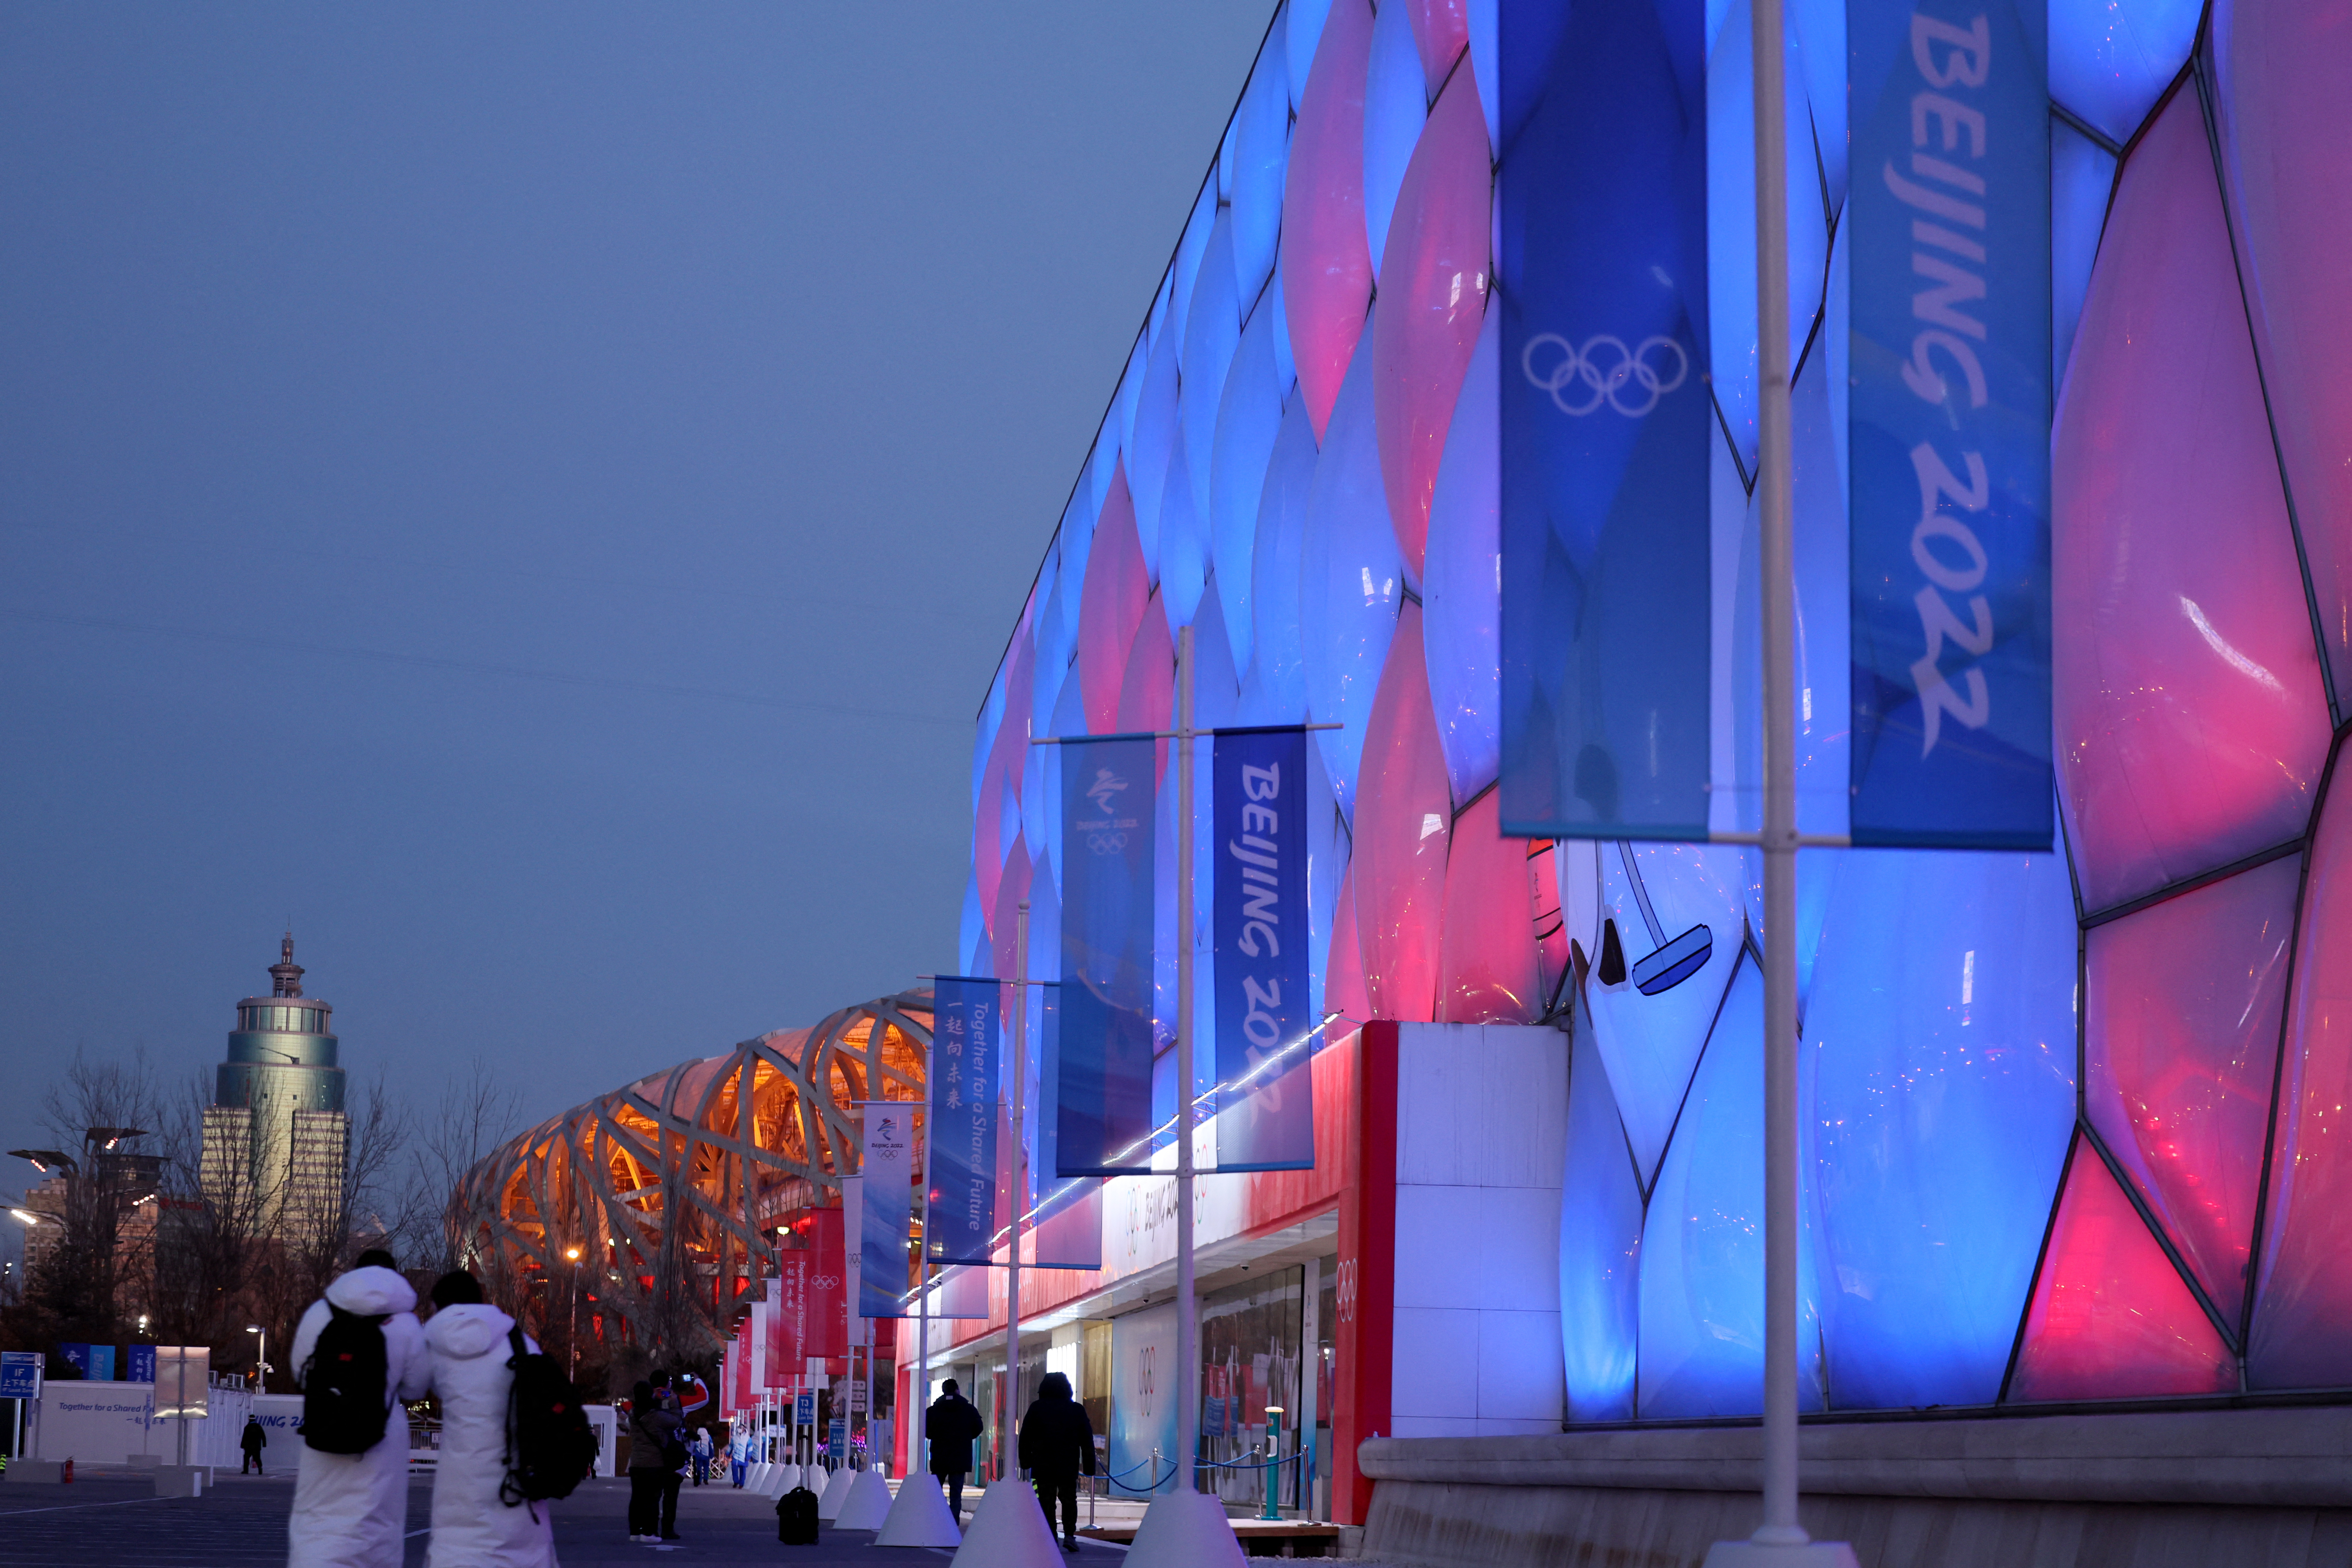 Beijing Games 2022: Google kicks off Winter Olympics with cute